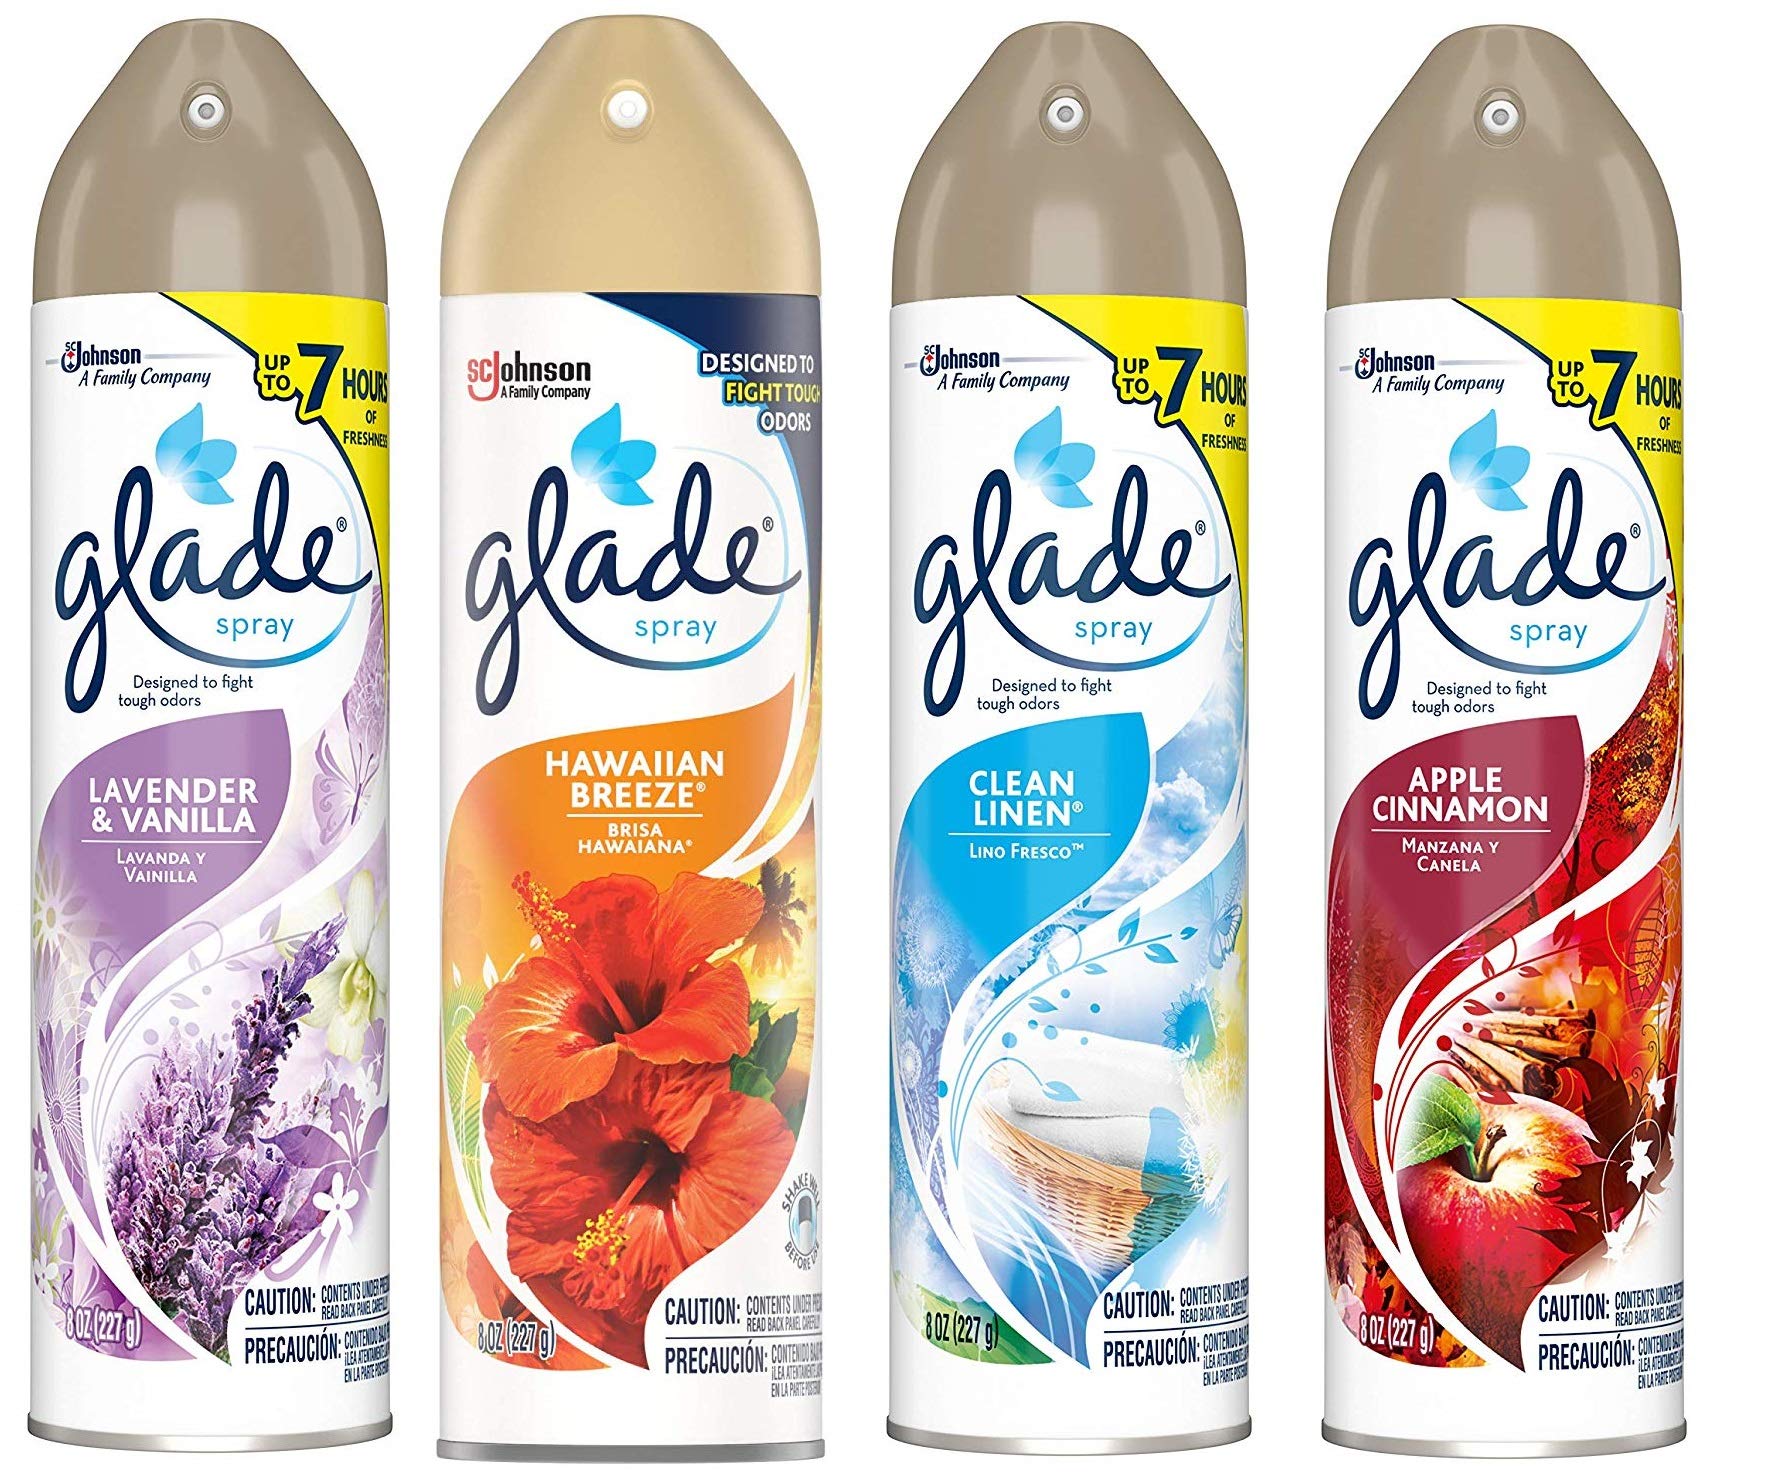 Glade Spray Collection 4 Flavors: Lavender & Vanilla, Hawaiian Breeze,  Clean Linen & Apple Cinnamon. Pack